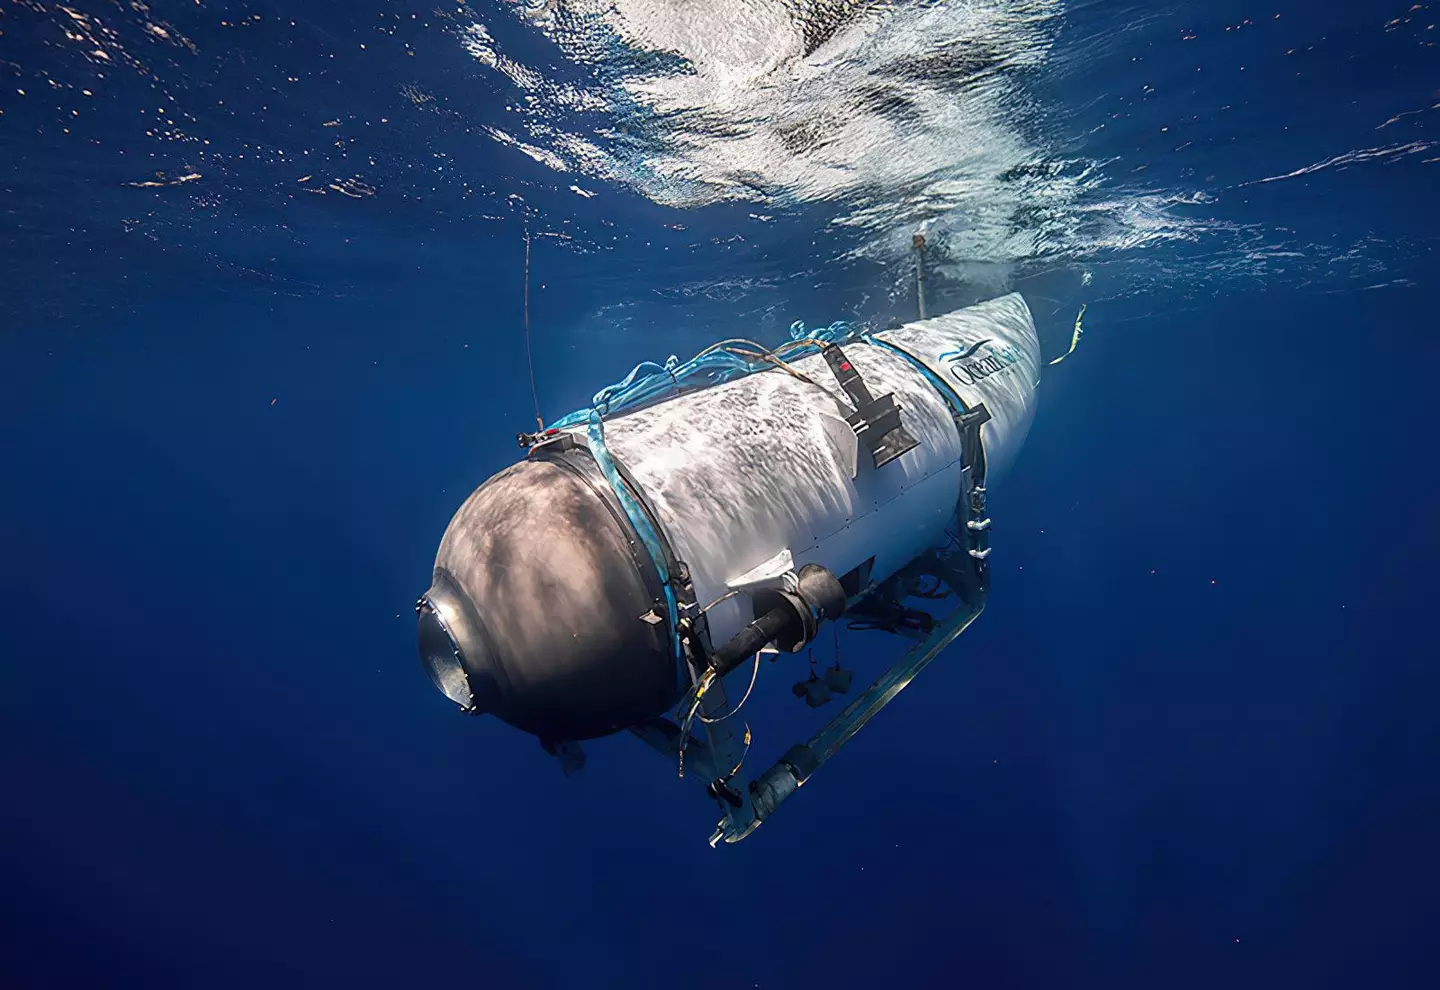 Debris from the Titan submarine was found this week.